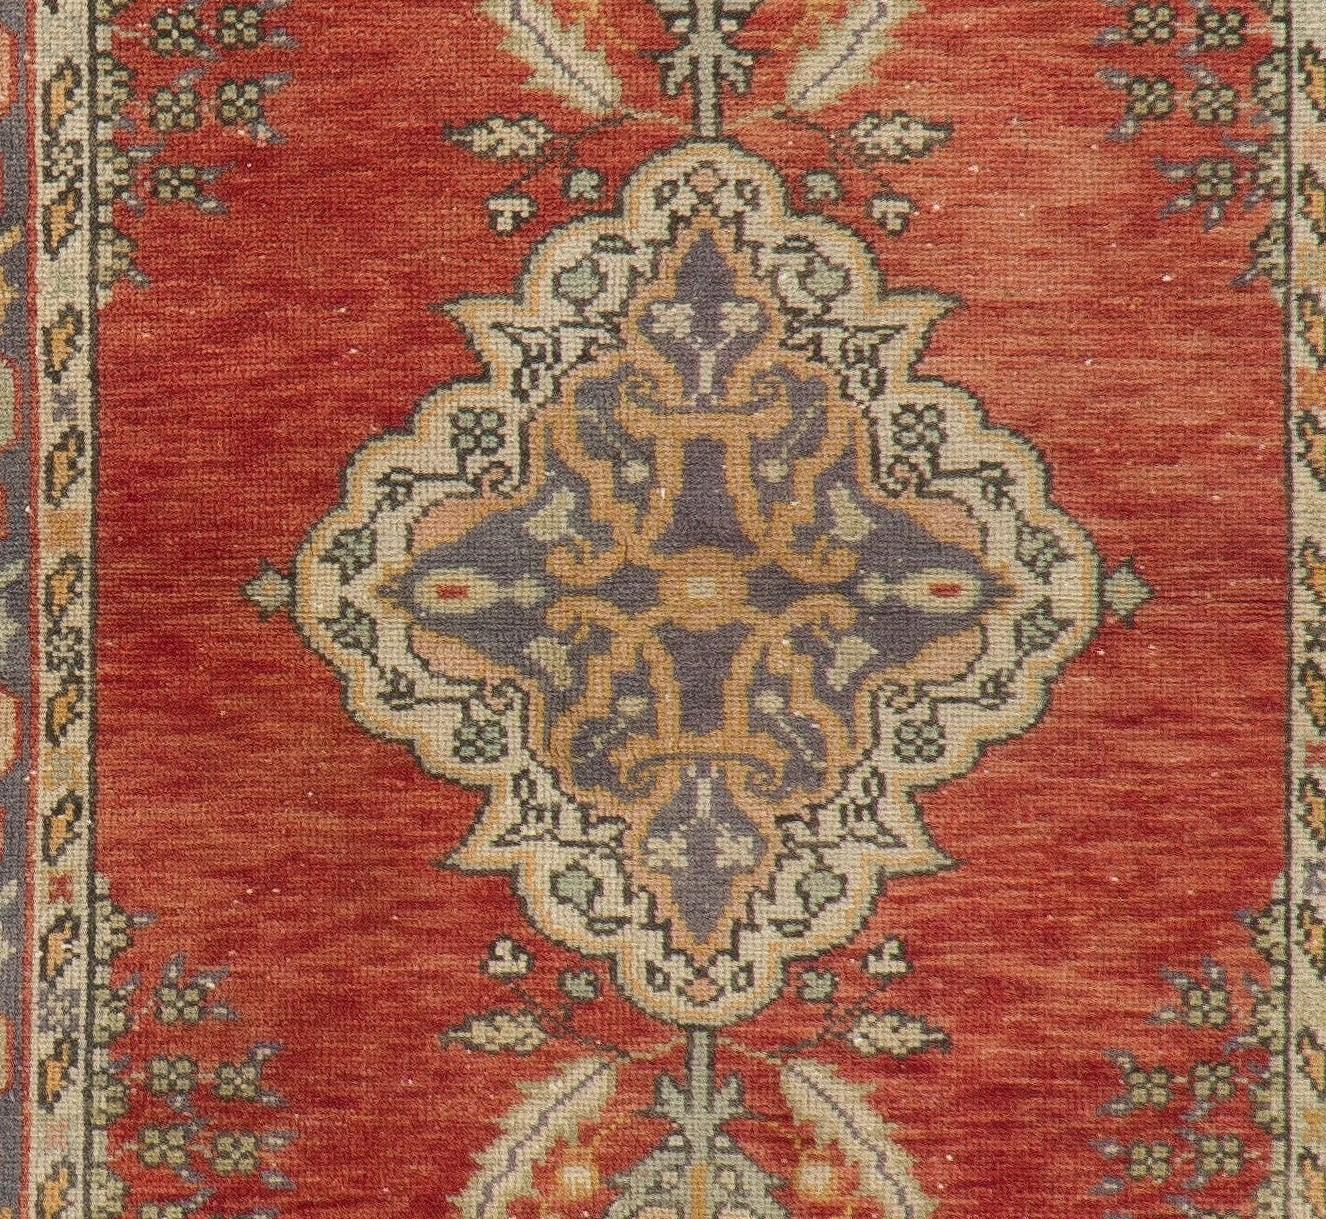 Hand-Woven 3.4x6.5 ft Vintage Handmade Turkish Rug in Warm Red, Beige with Medallion Design